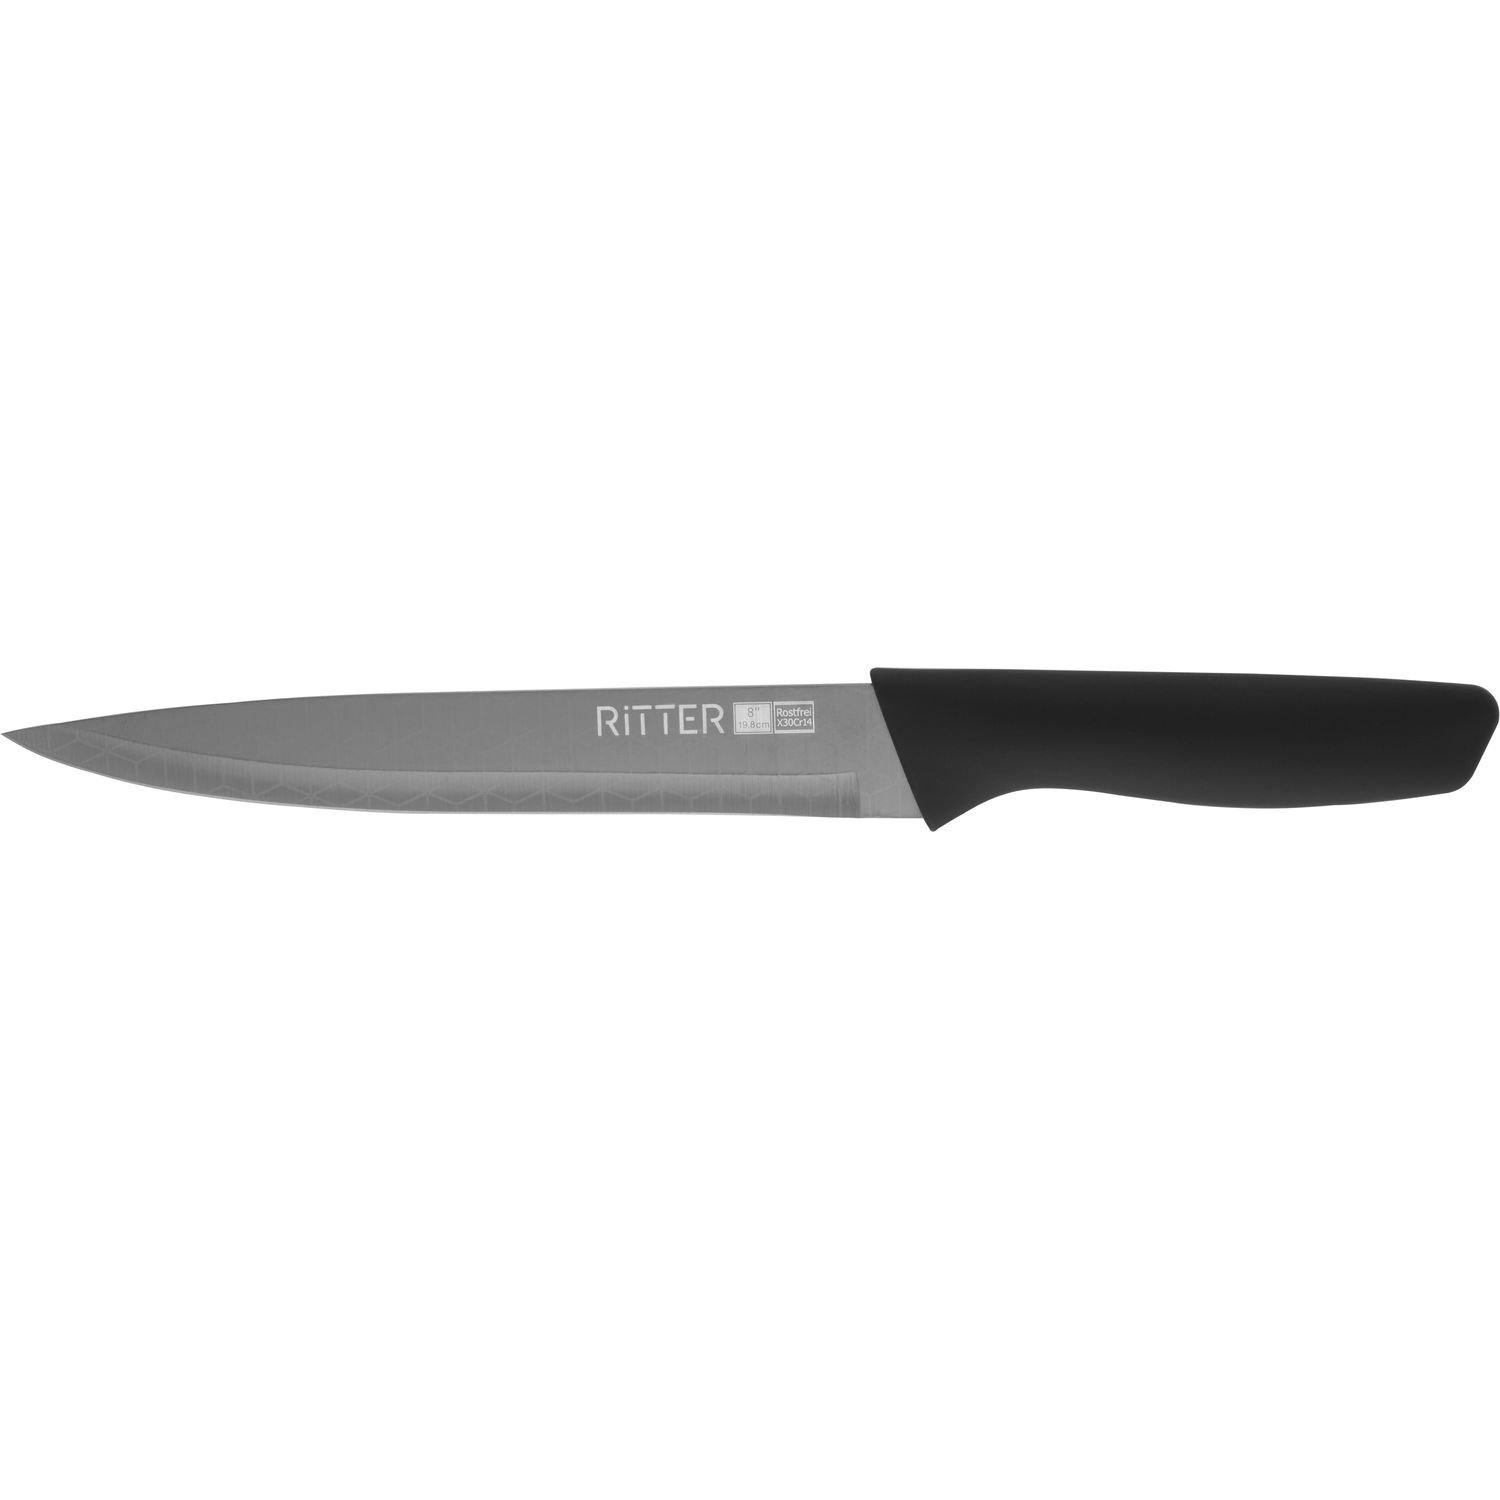 Нож Ritter слайсерный 19.7см (29-305-031) - фото 1